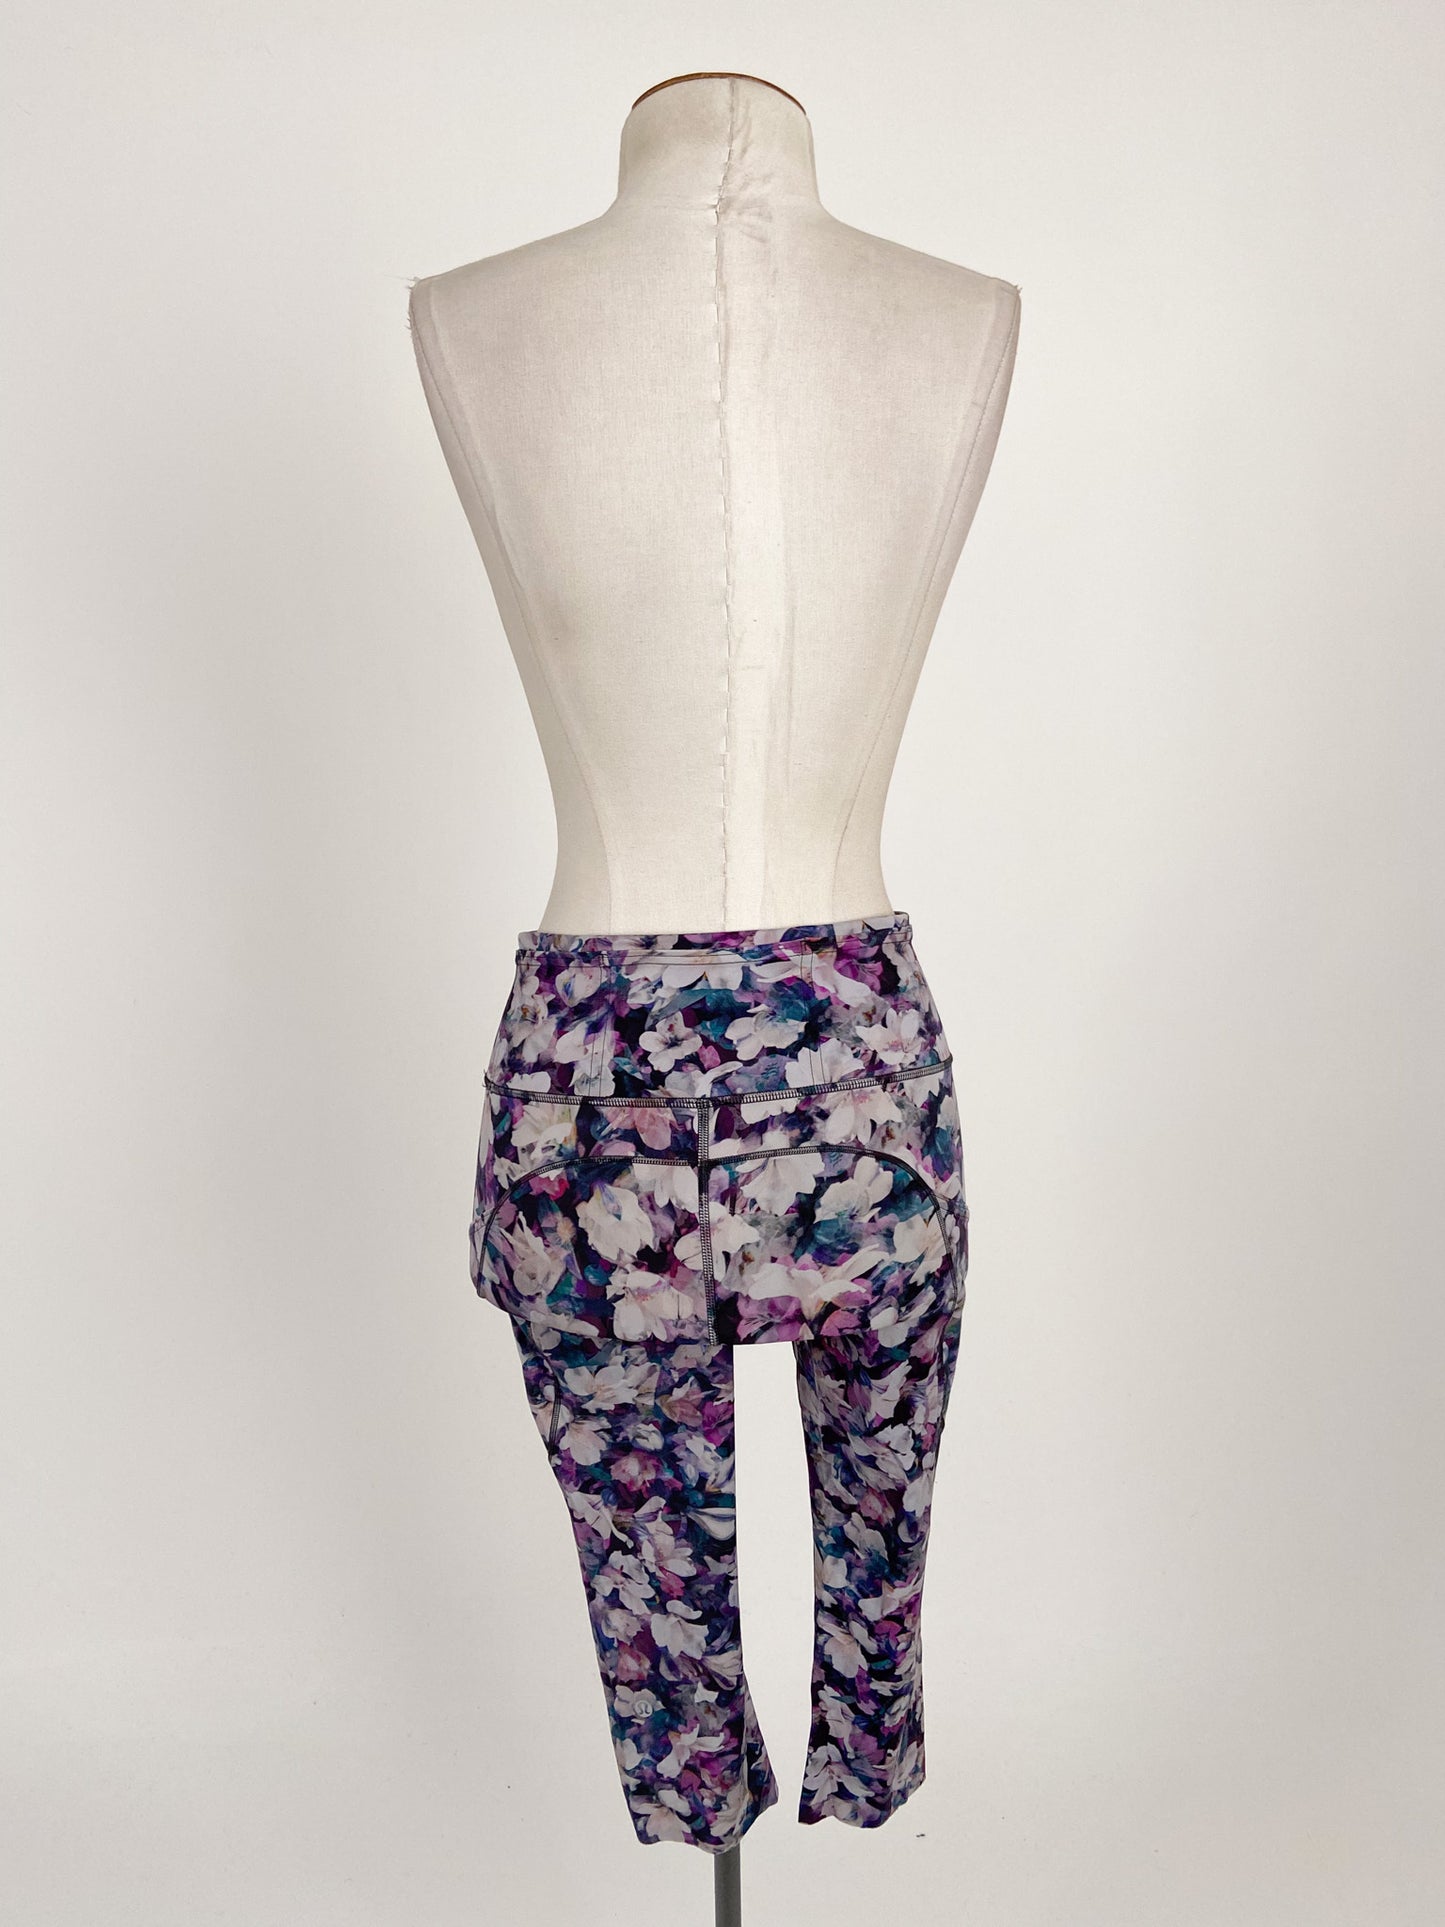 Lululemon | Multicoloured Casual Activewear Bottom | Size 8